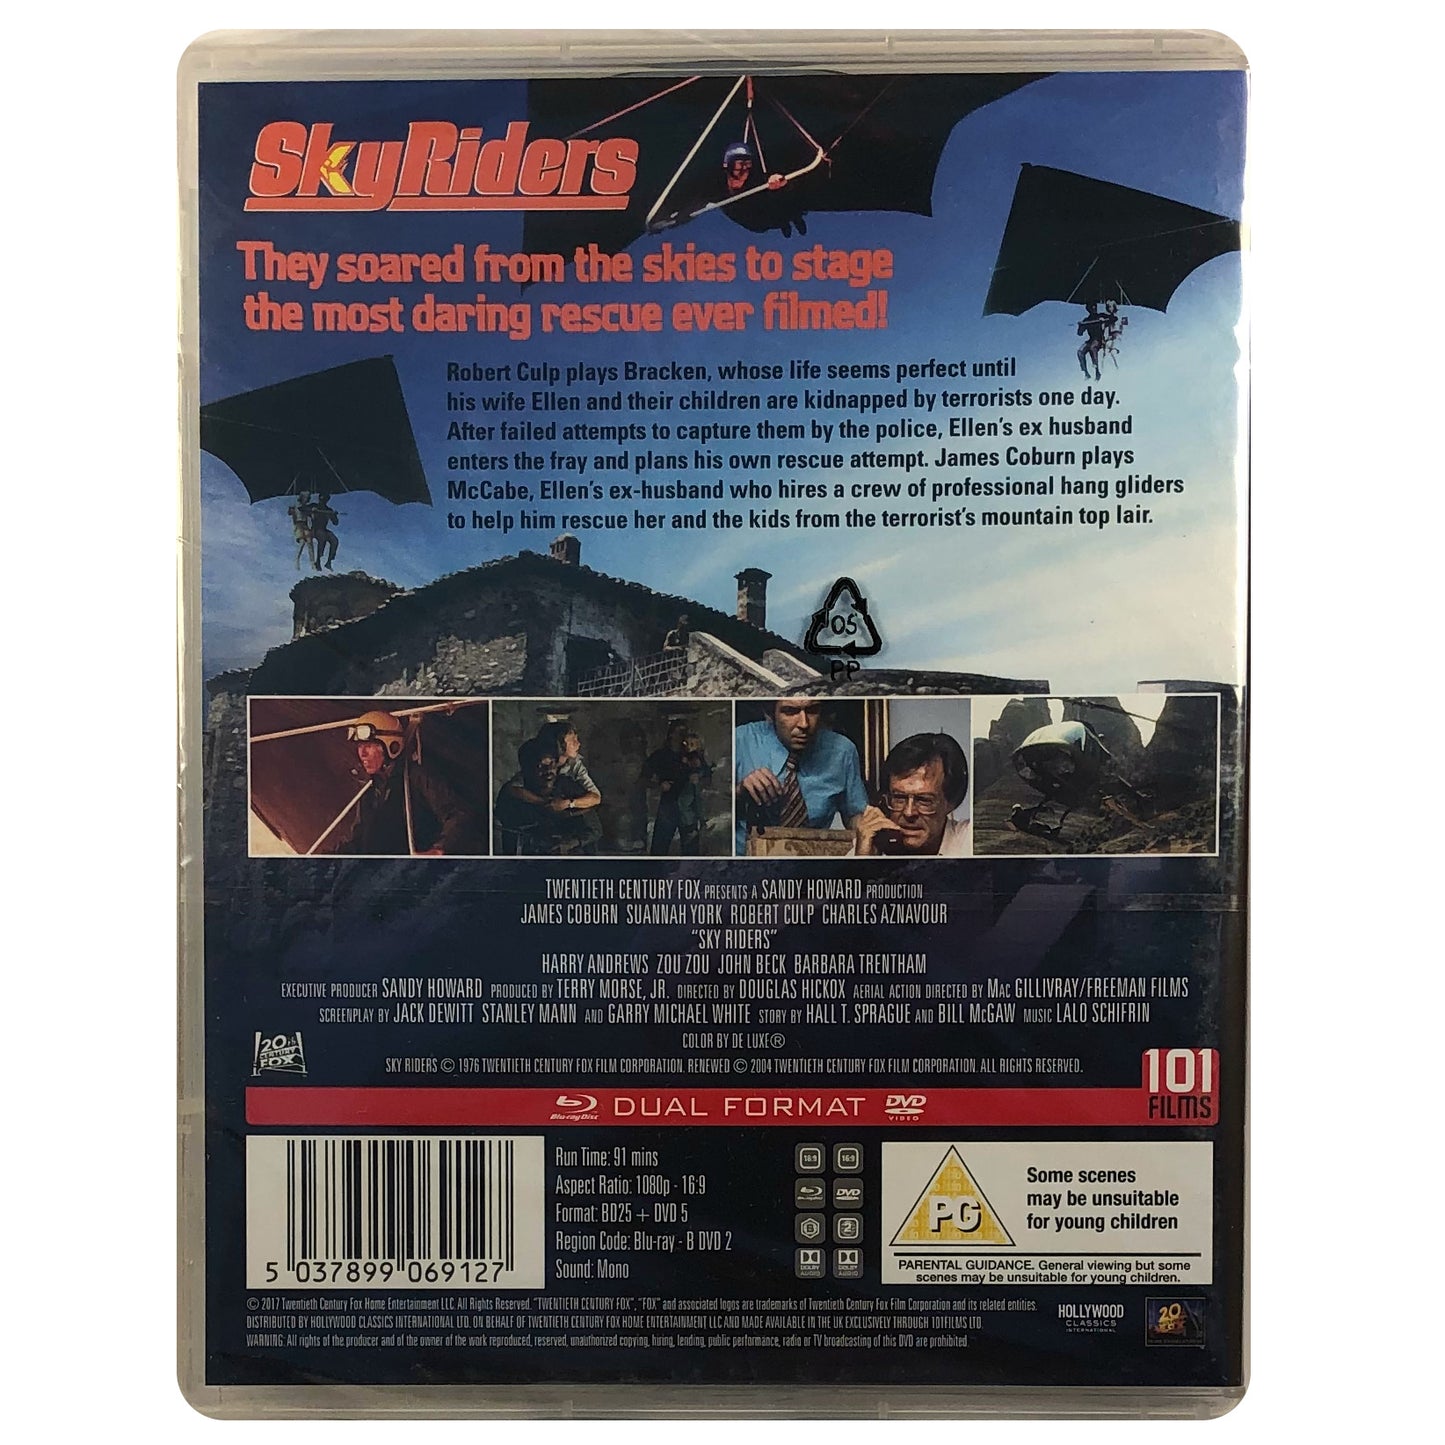 Skyriders Blu-Ray